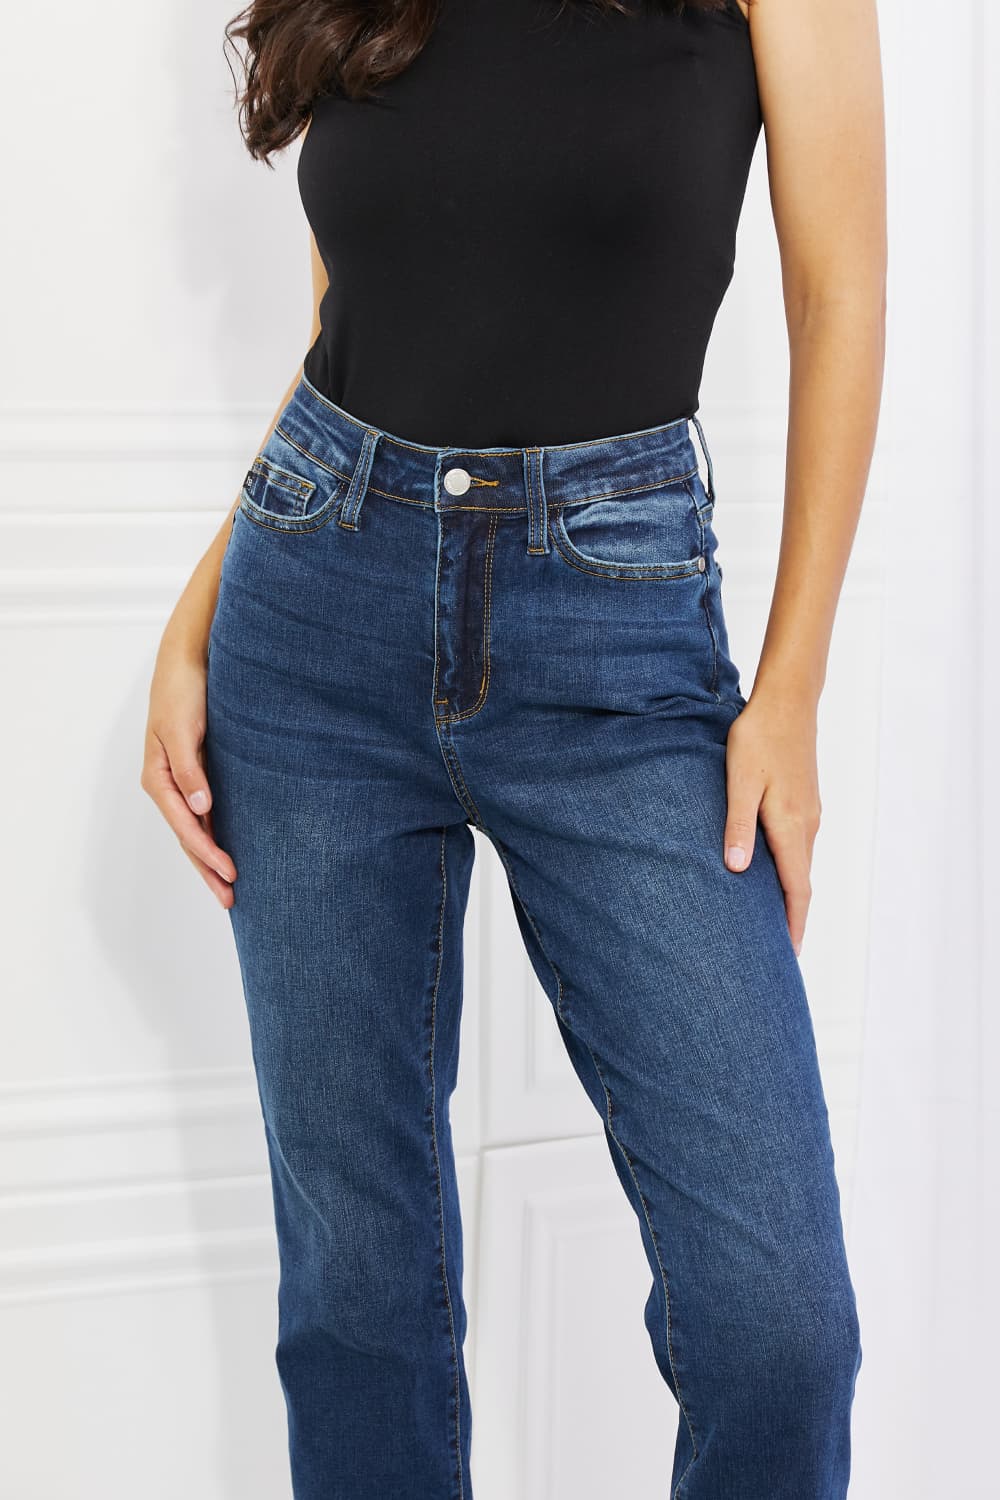 Judy Blue Crystal Full Size High Waisted Cuffed Boyfriend Jeans  Krazy Heart Designs Boutique   